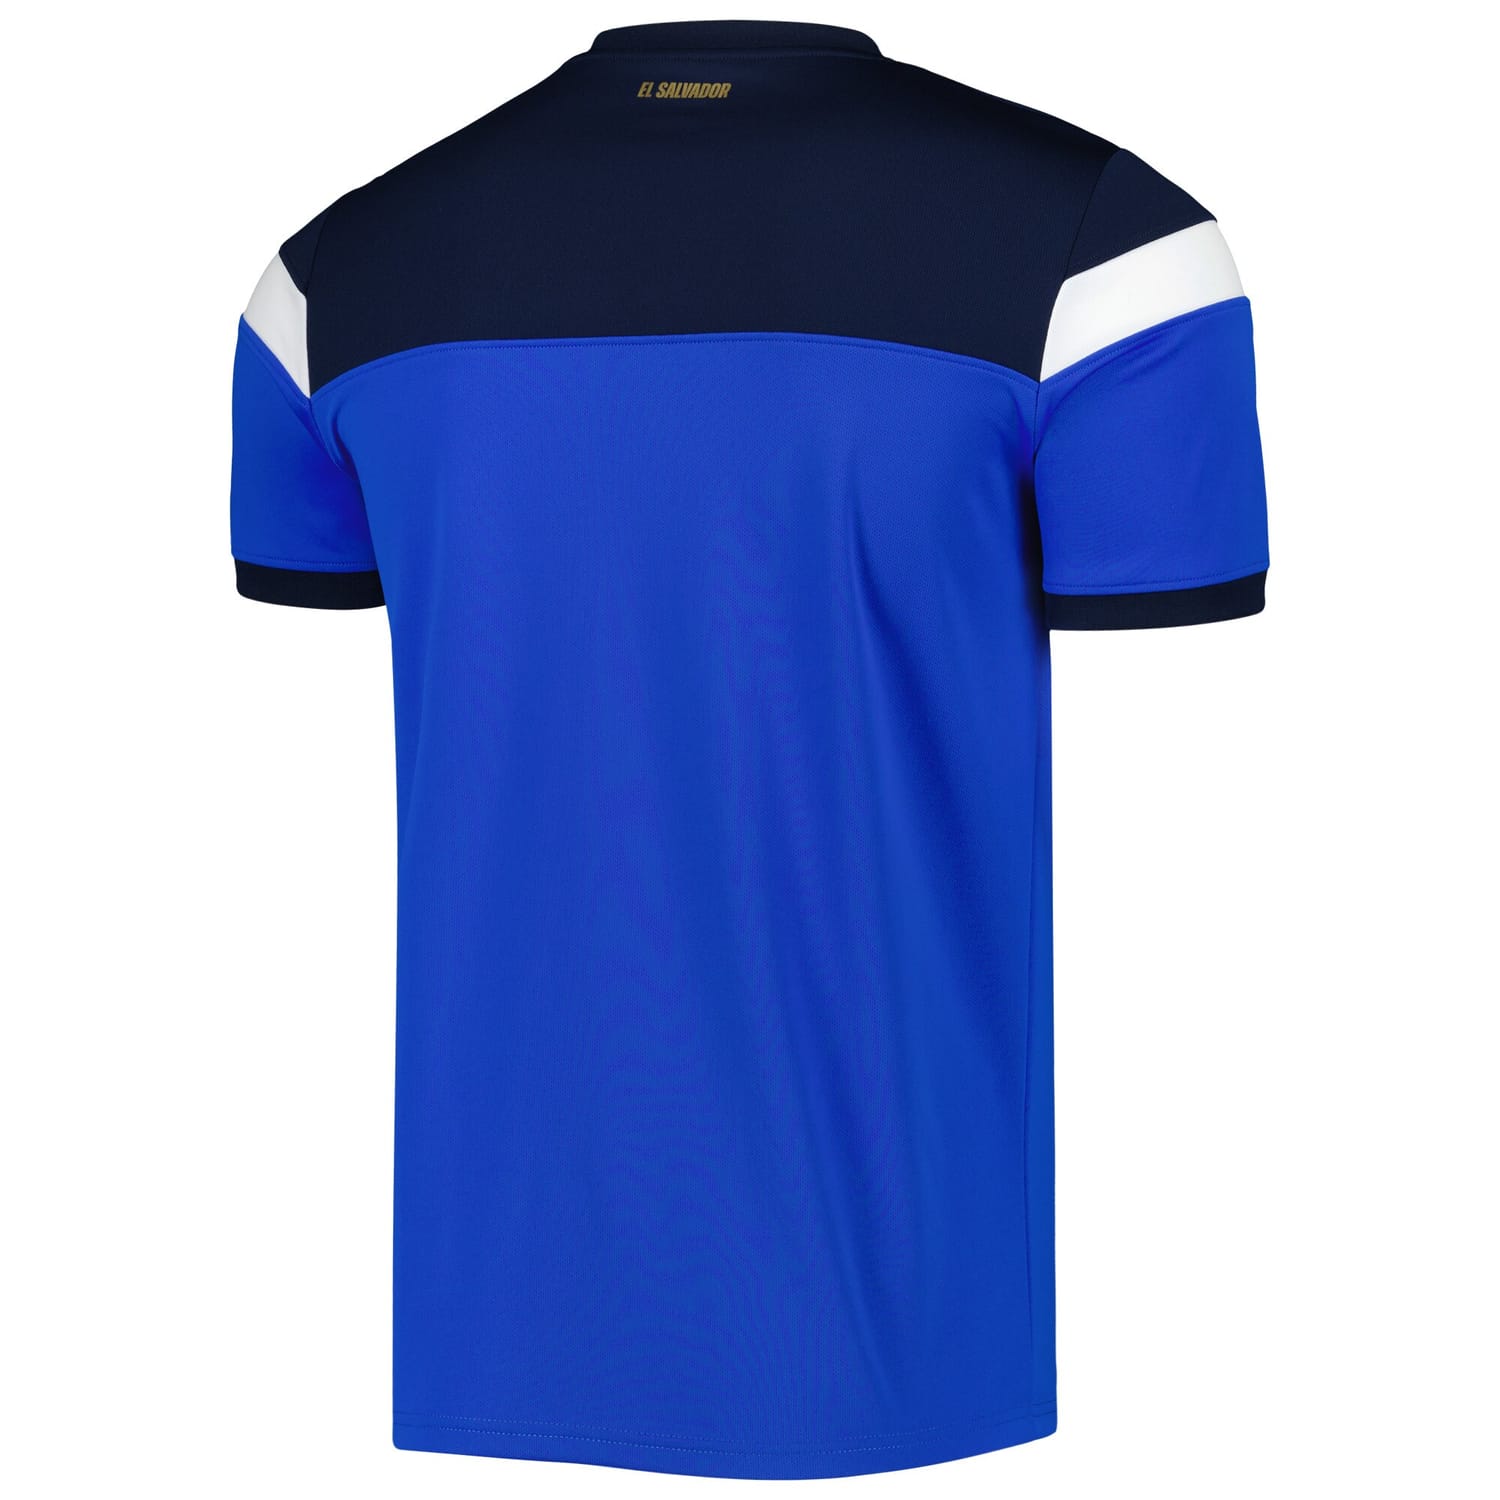 El Salvador National Team Training Jersey Shirt Blue 2023 for Men